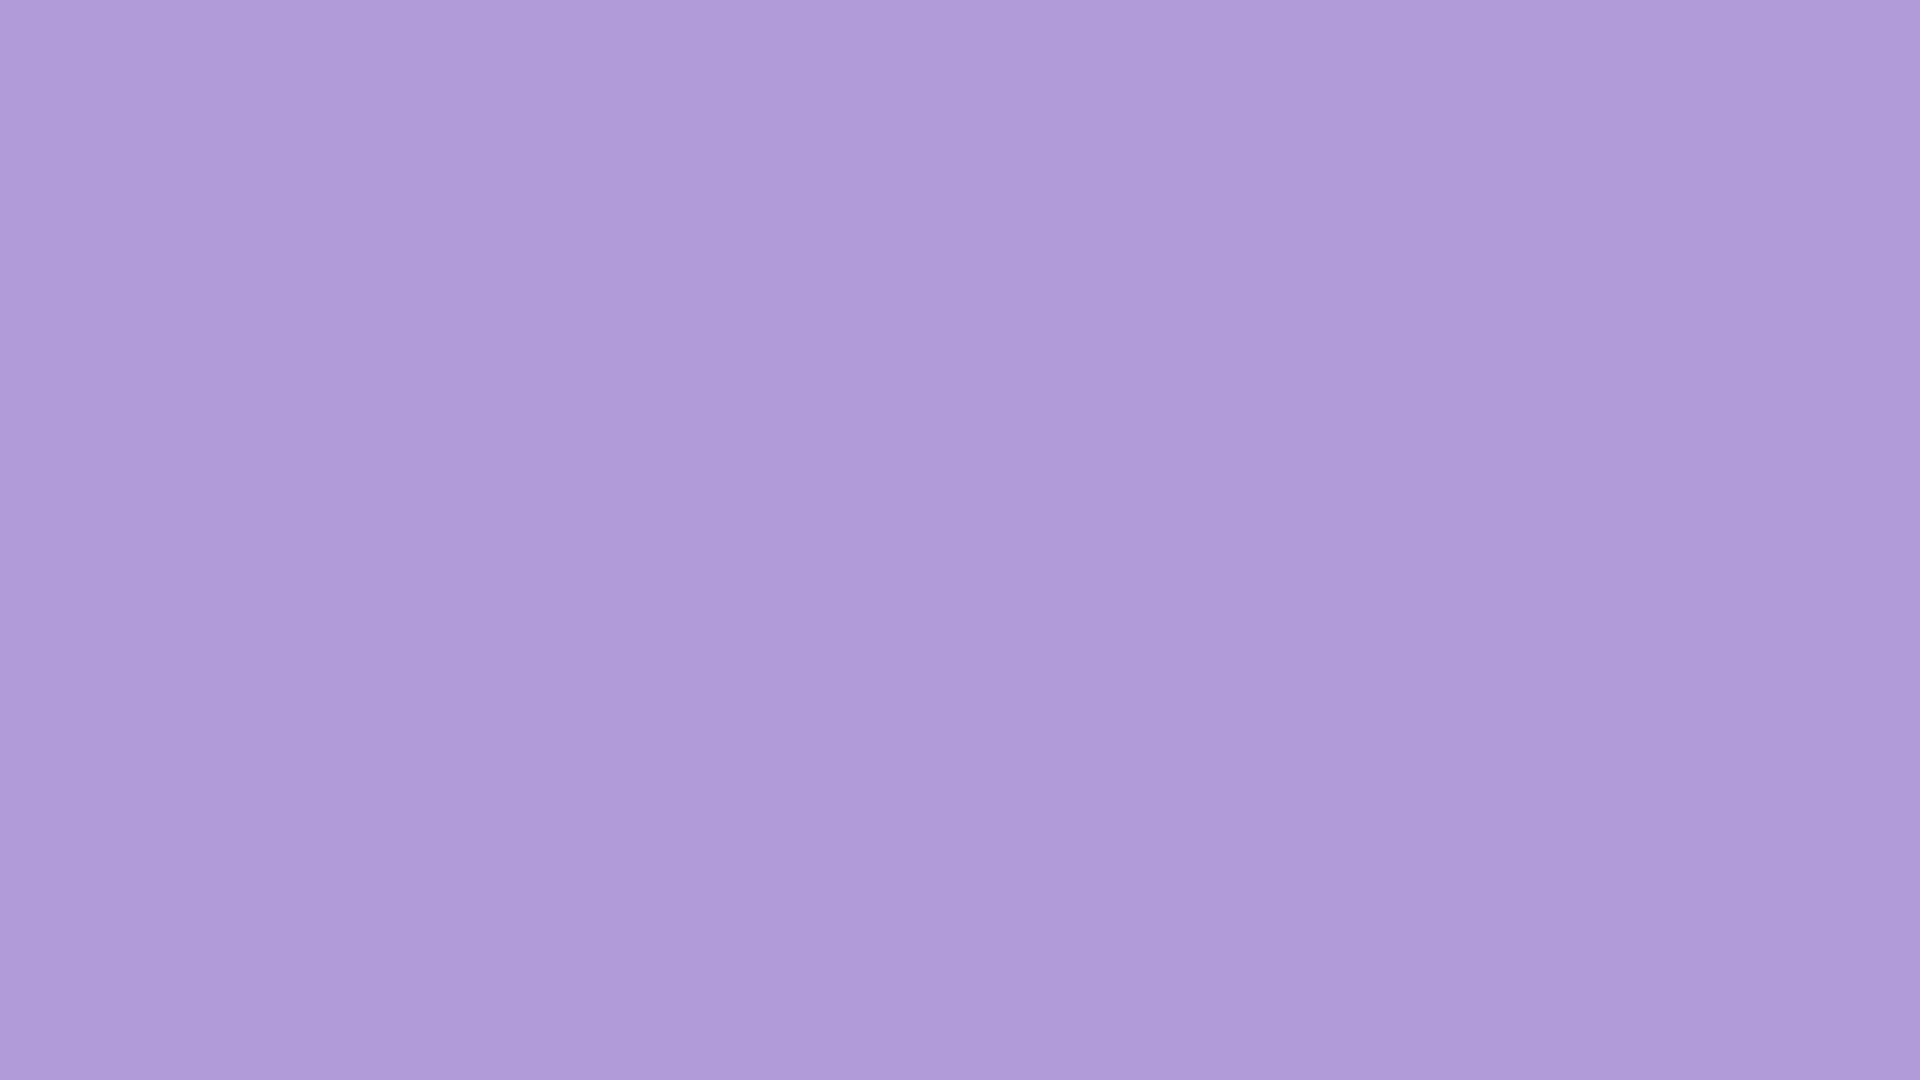 Purple Aesthetic Desktop Wallpapers - Top Free Purple ...